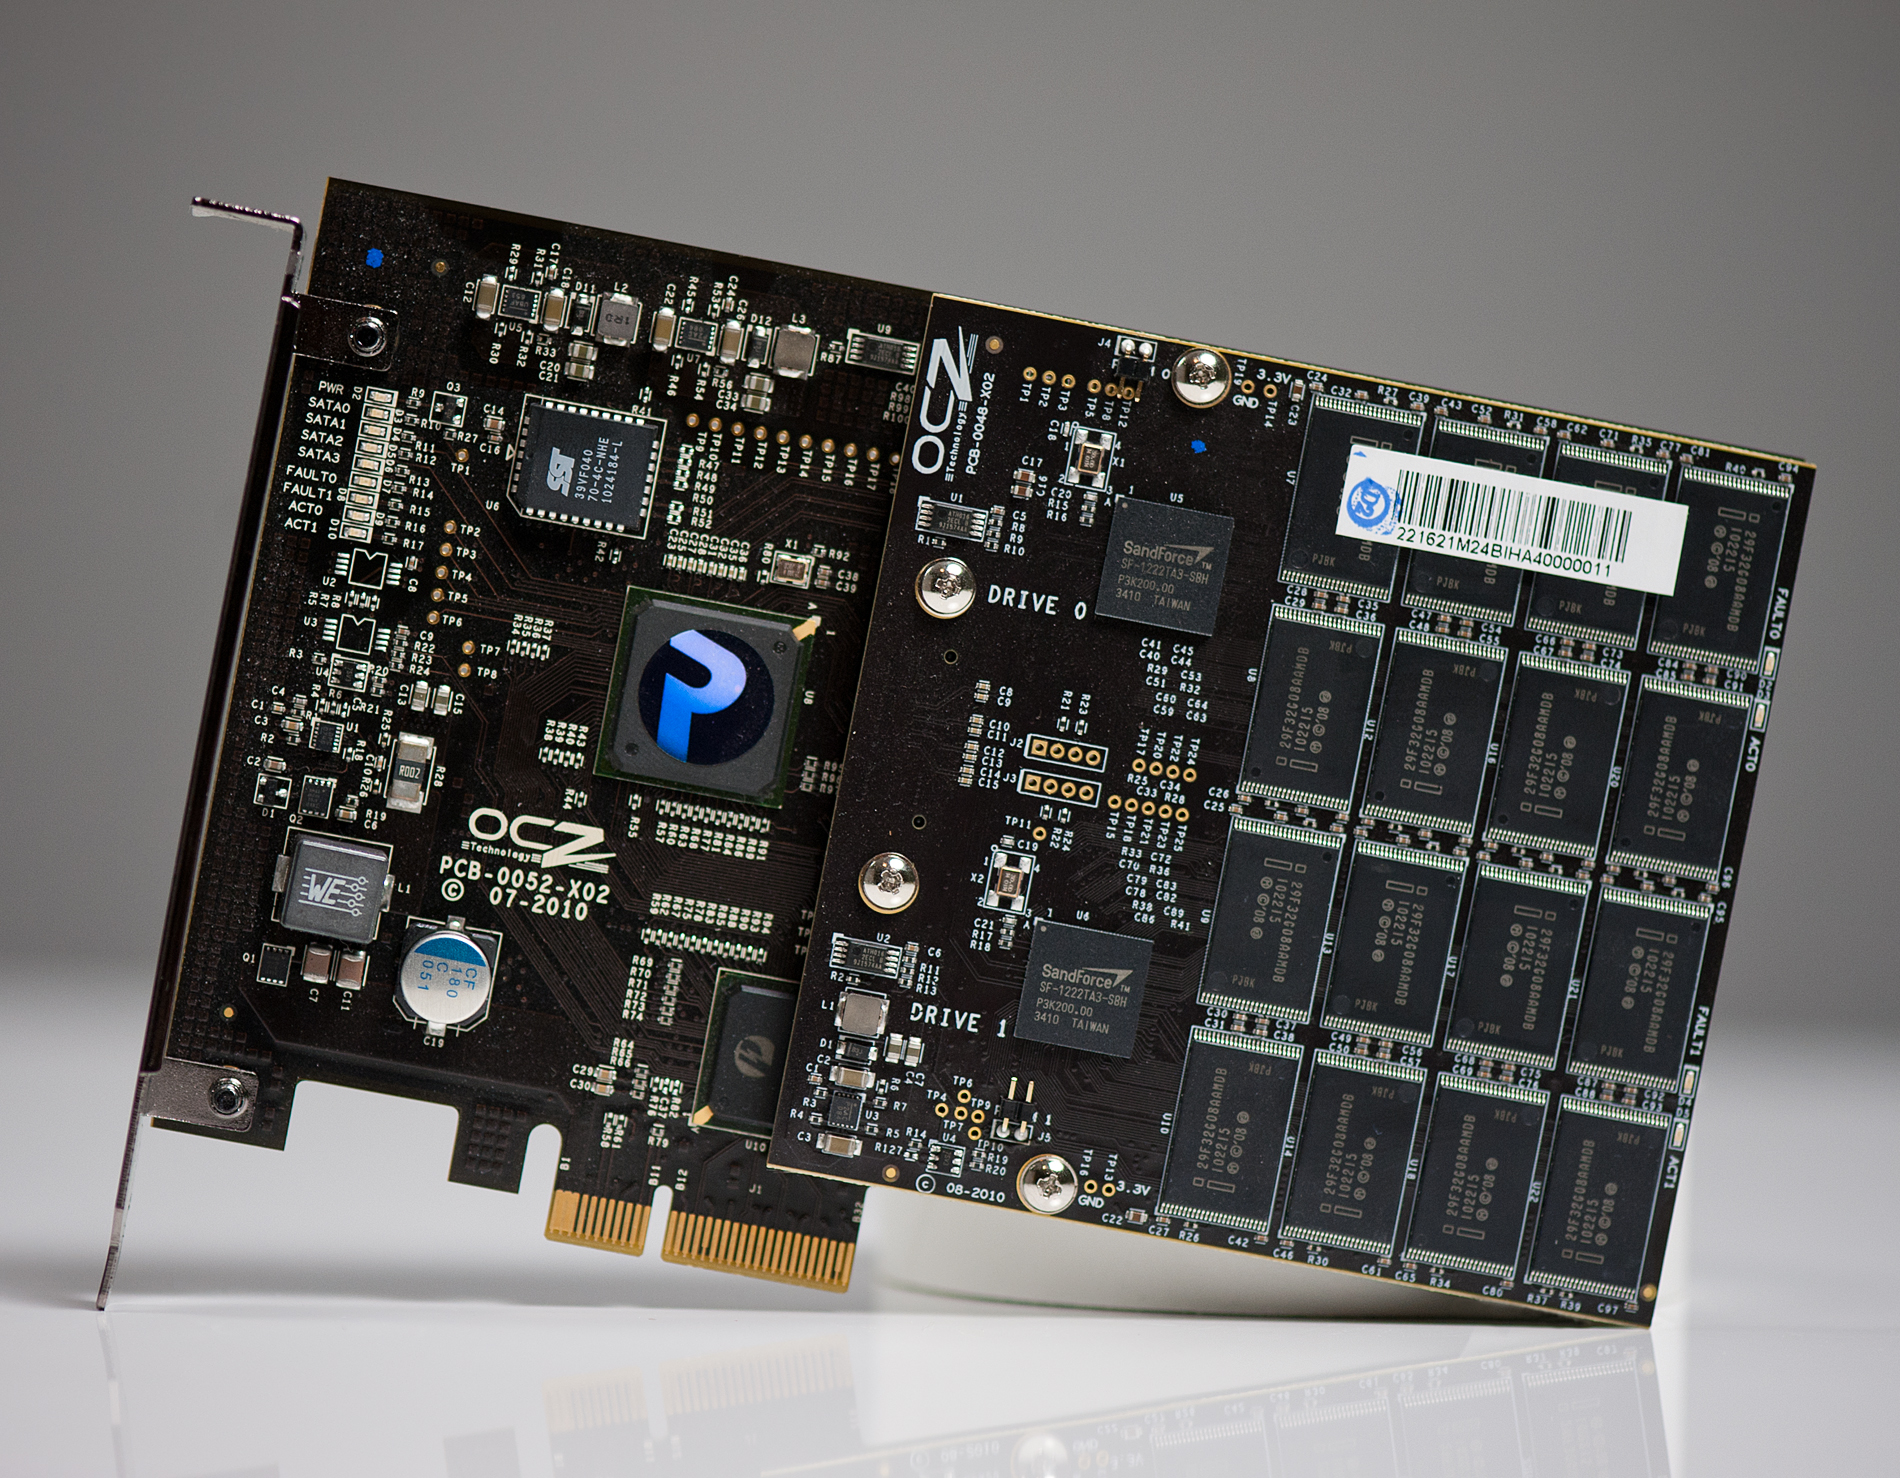 Faldgruber pasta koks Intel's SSD 910: Finally a PCIe SSD from Intel